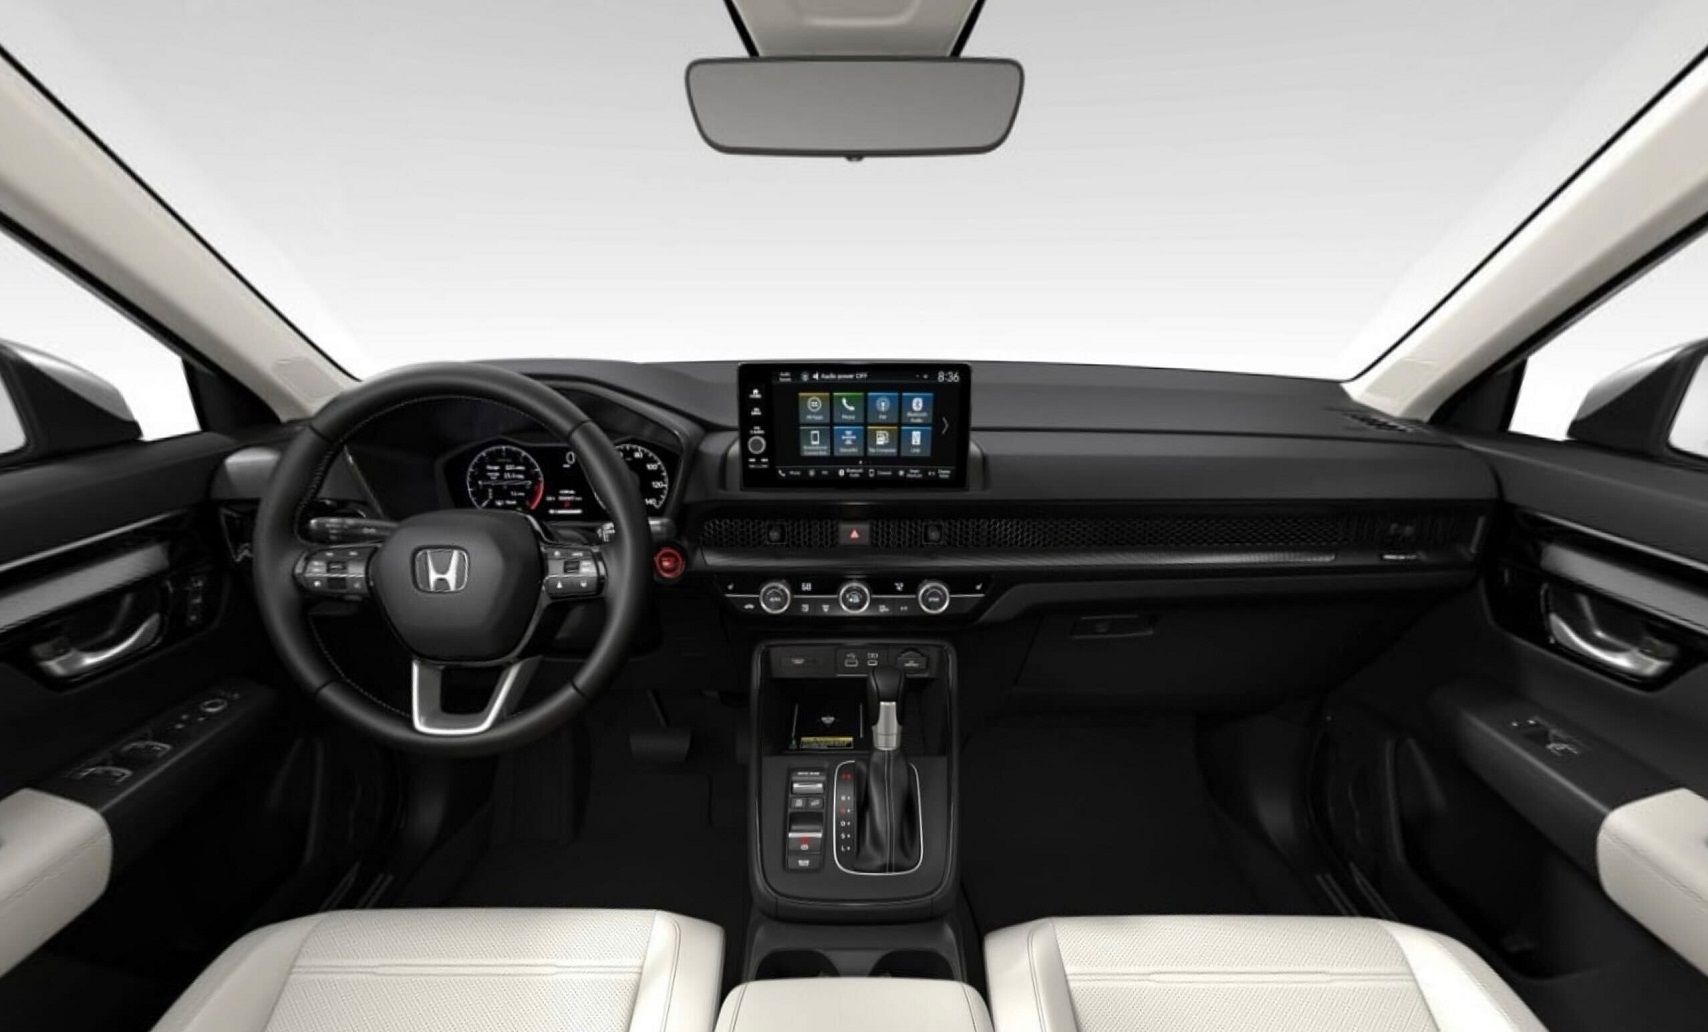 2023 Honda CR-V Interiors Image